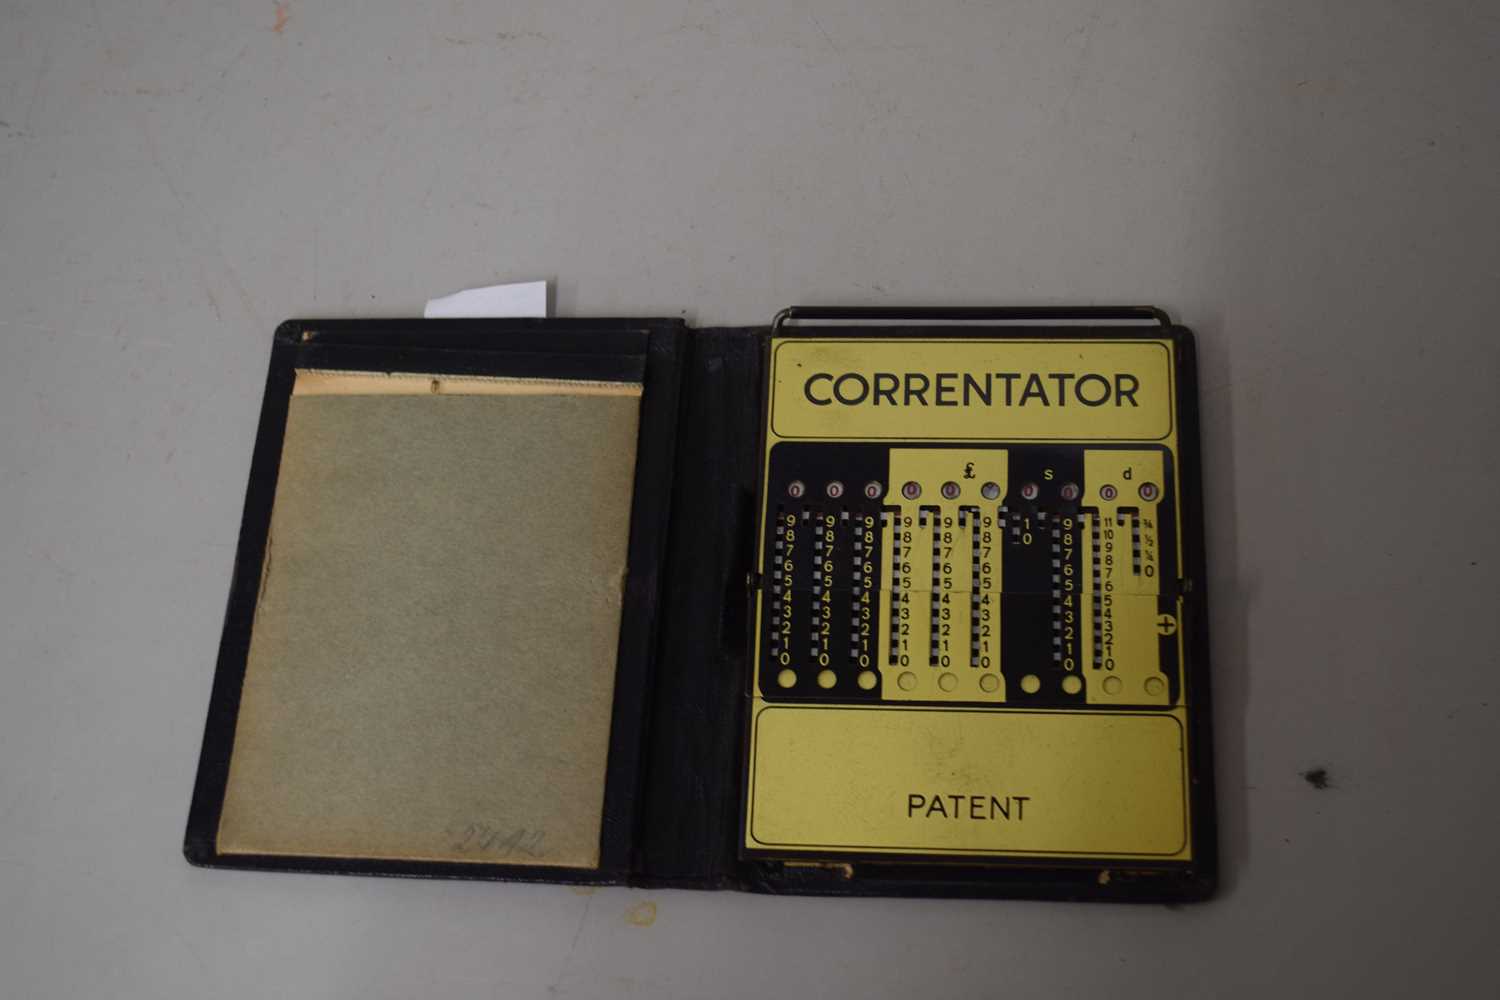 A vintage Correntator Additor calculator